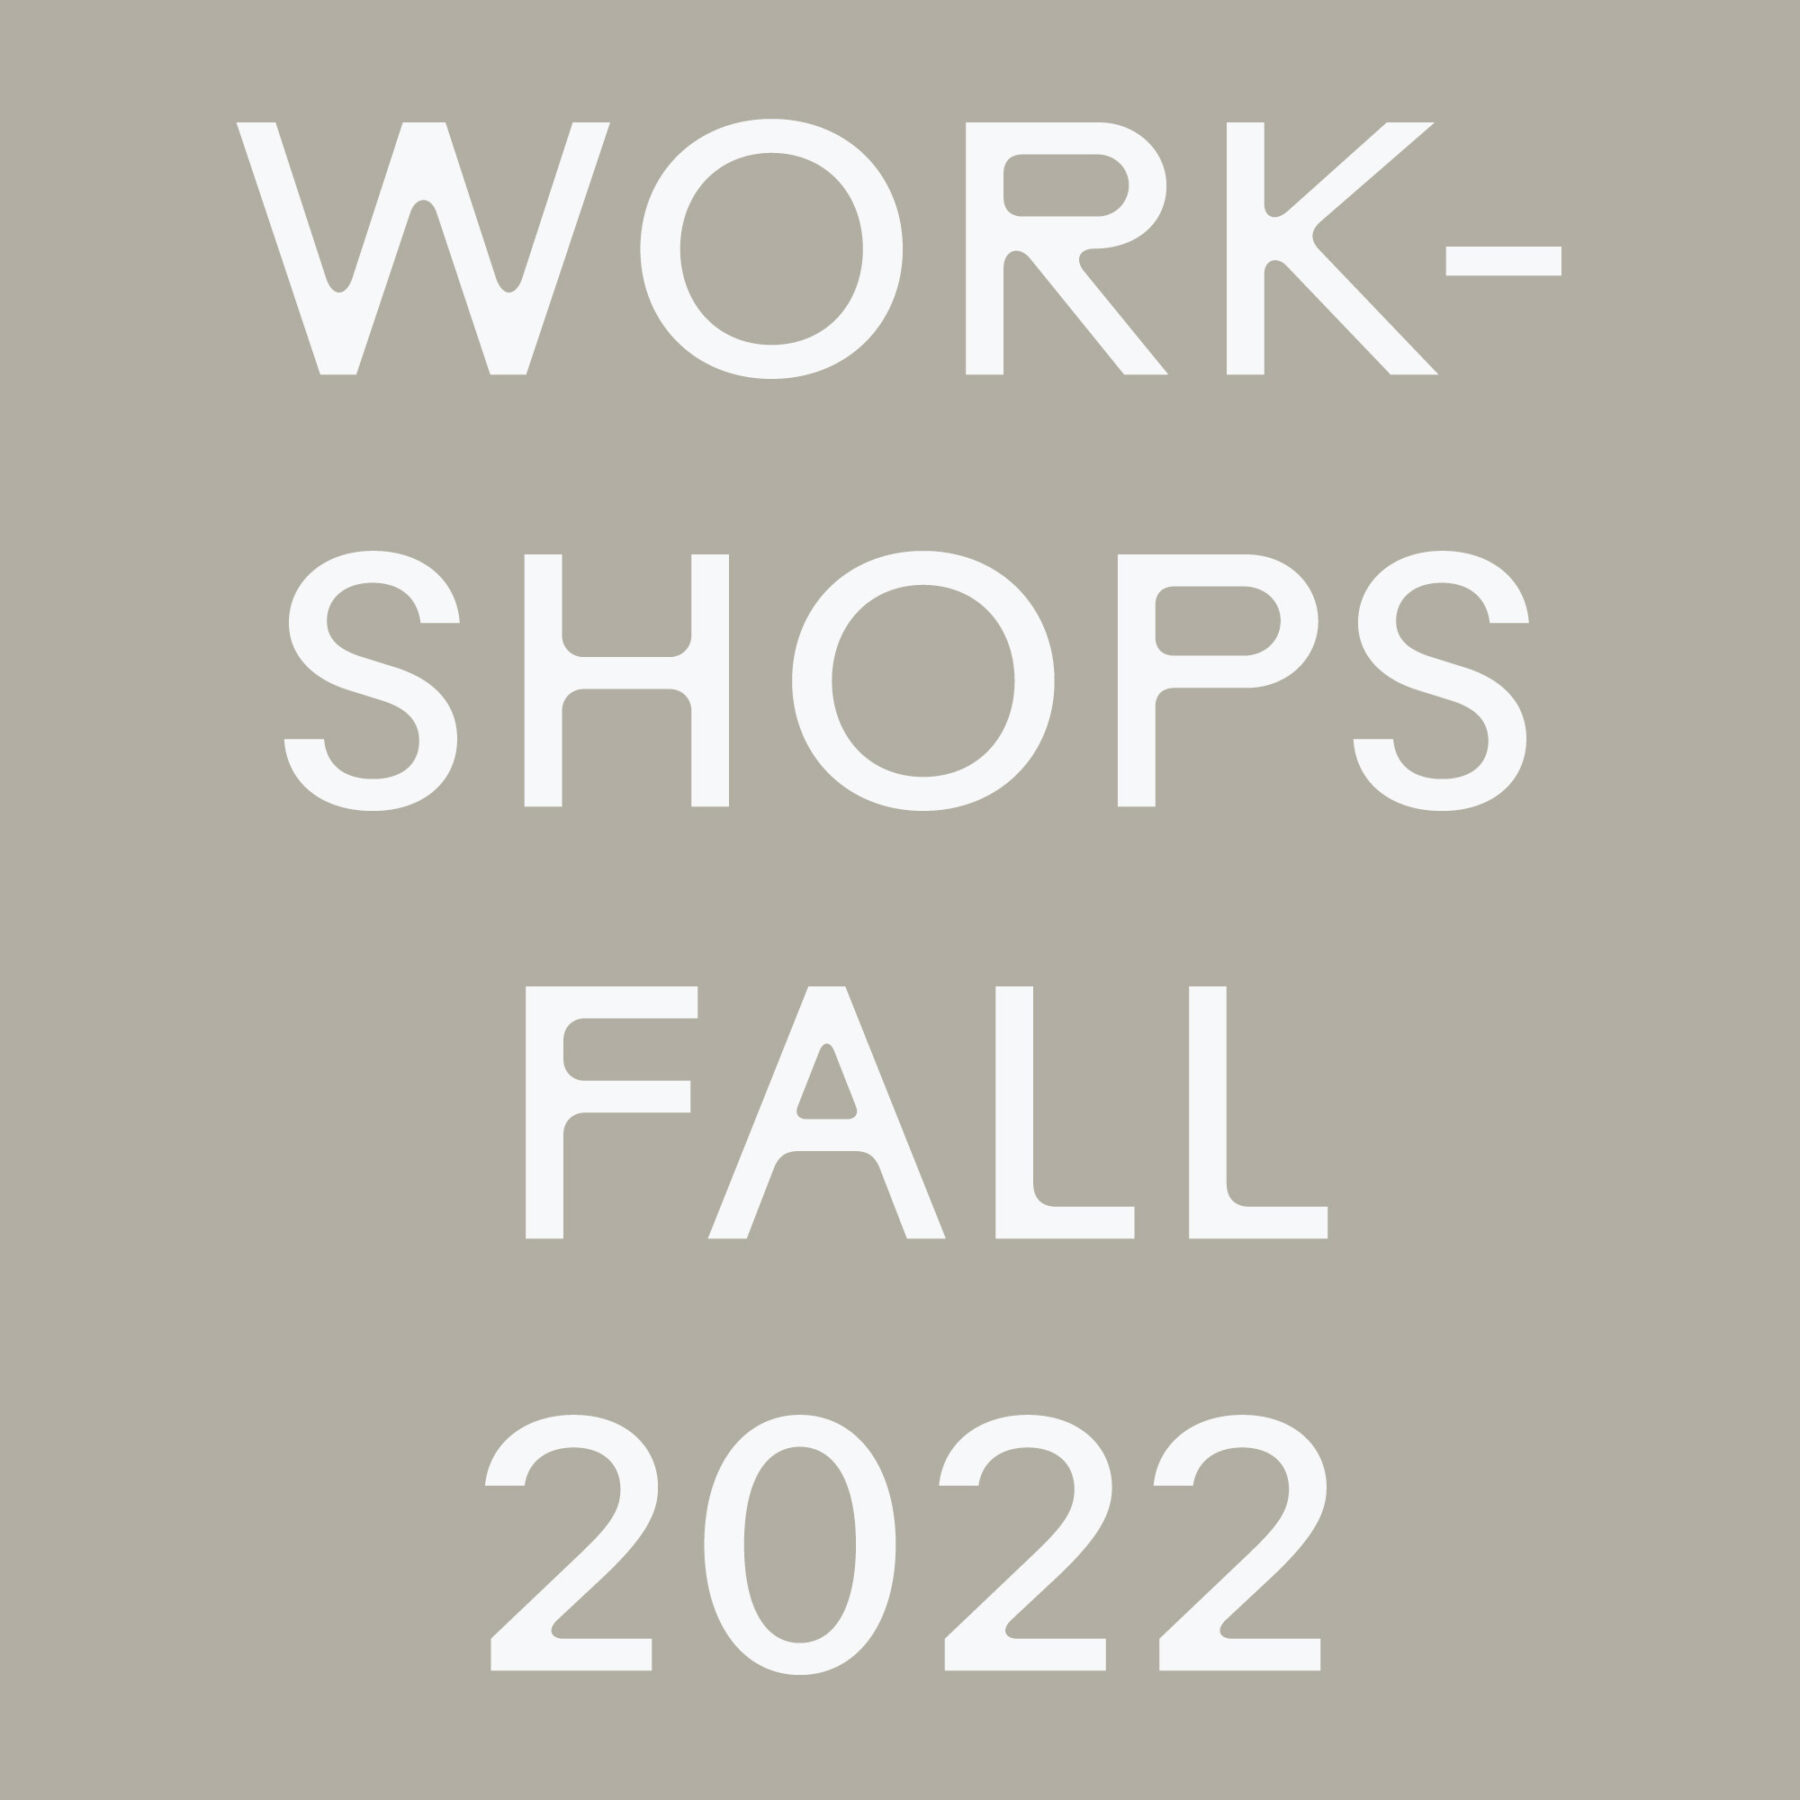 Workshops Fall 2022